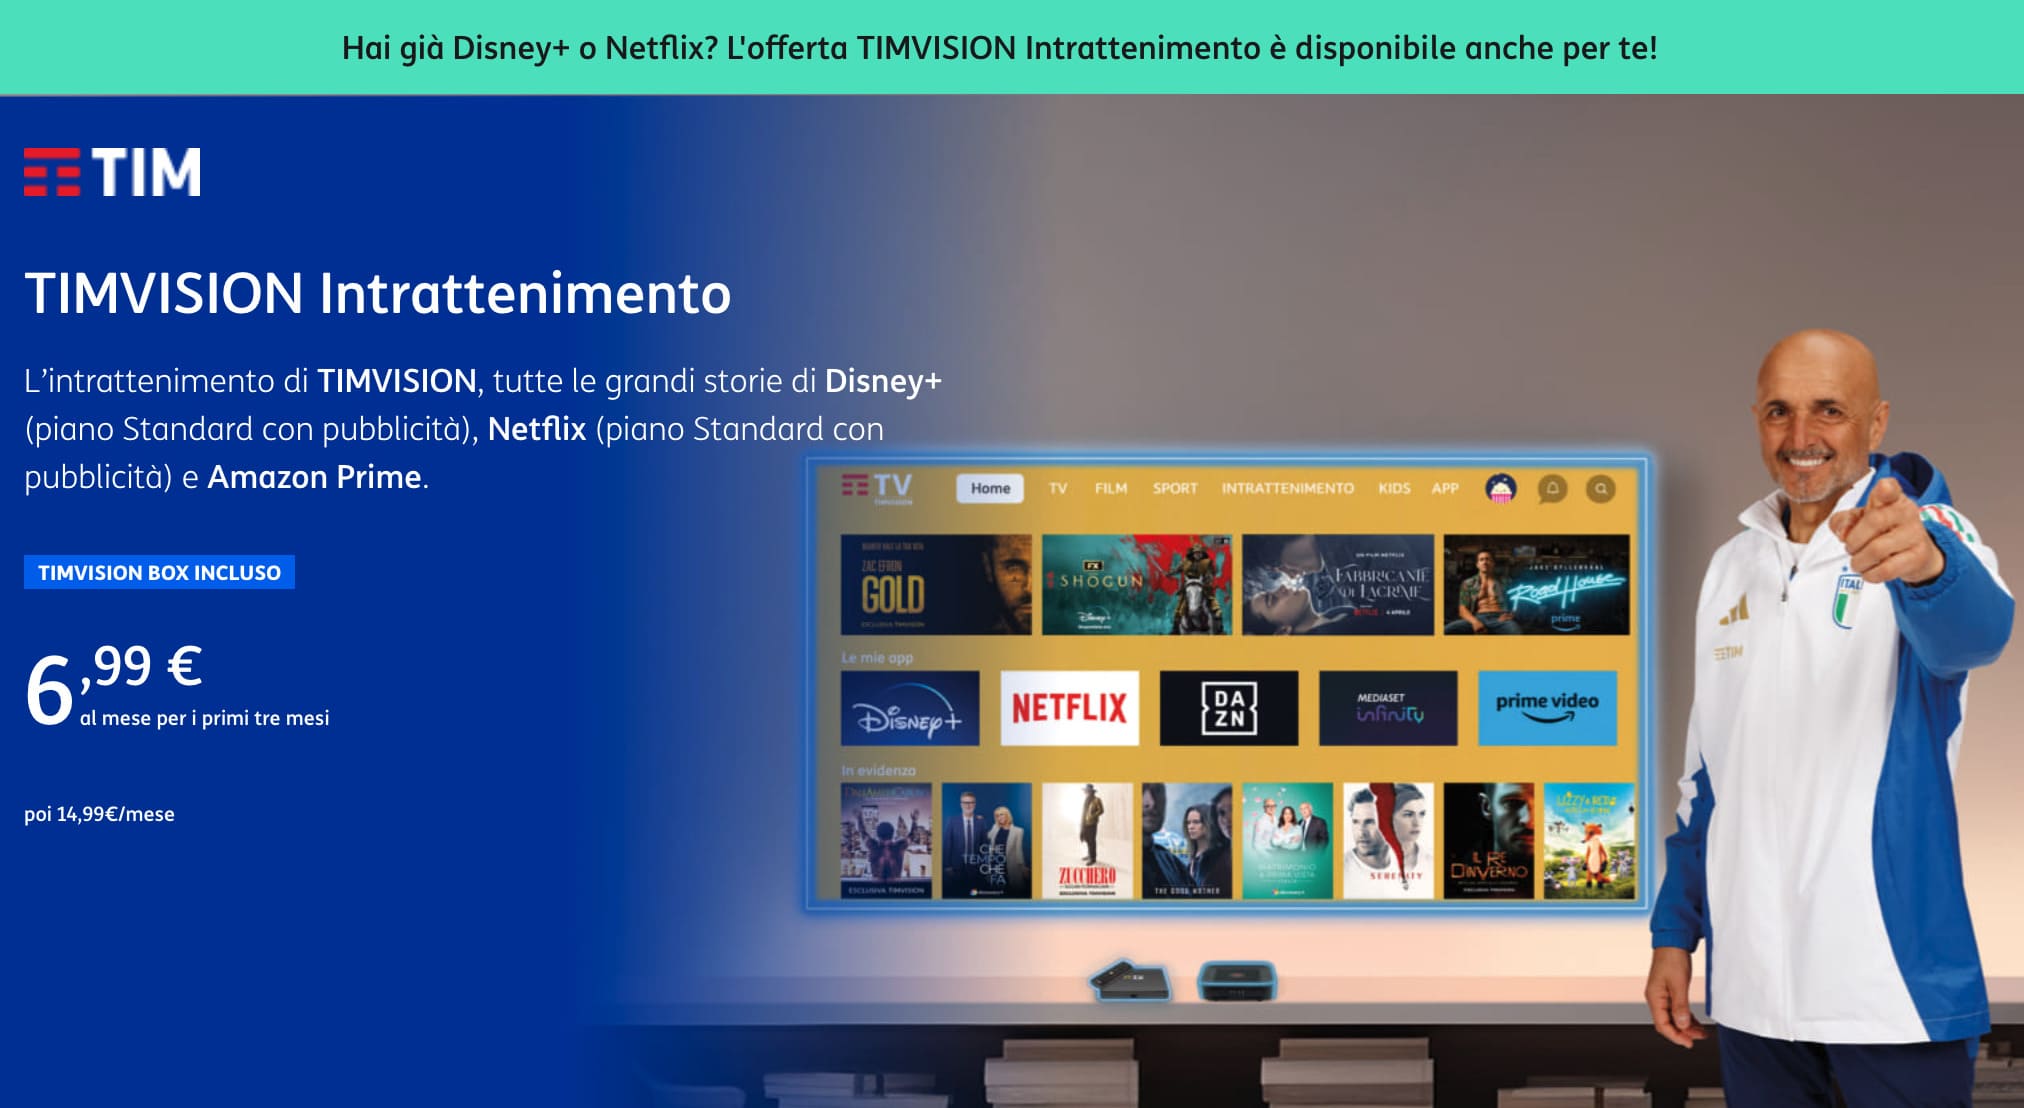 Offerta TIMVision Intrattenimento a 6,99 € al mese